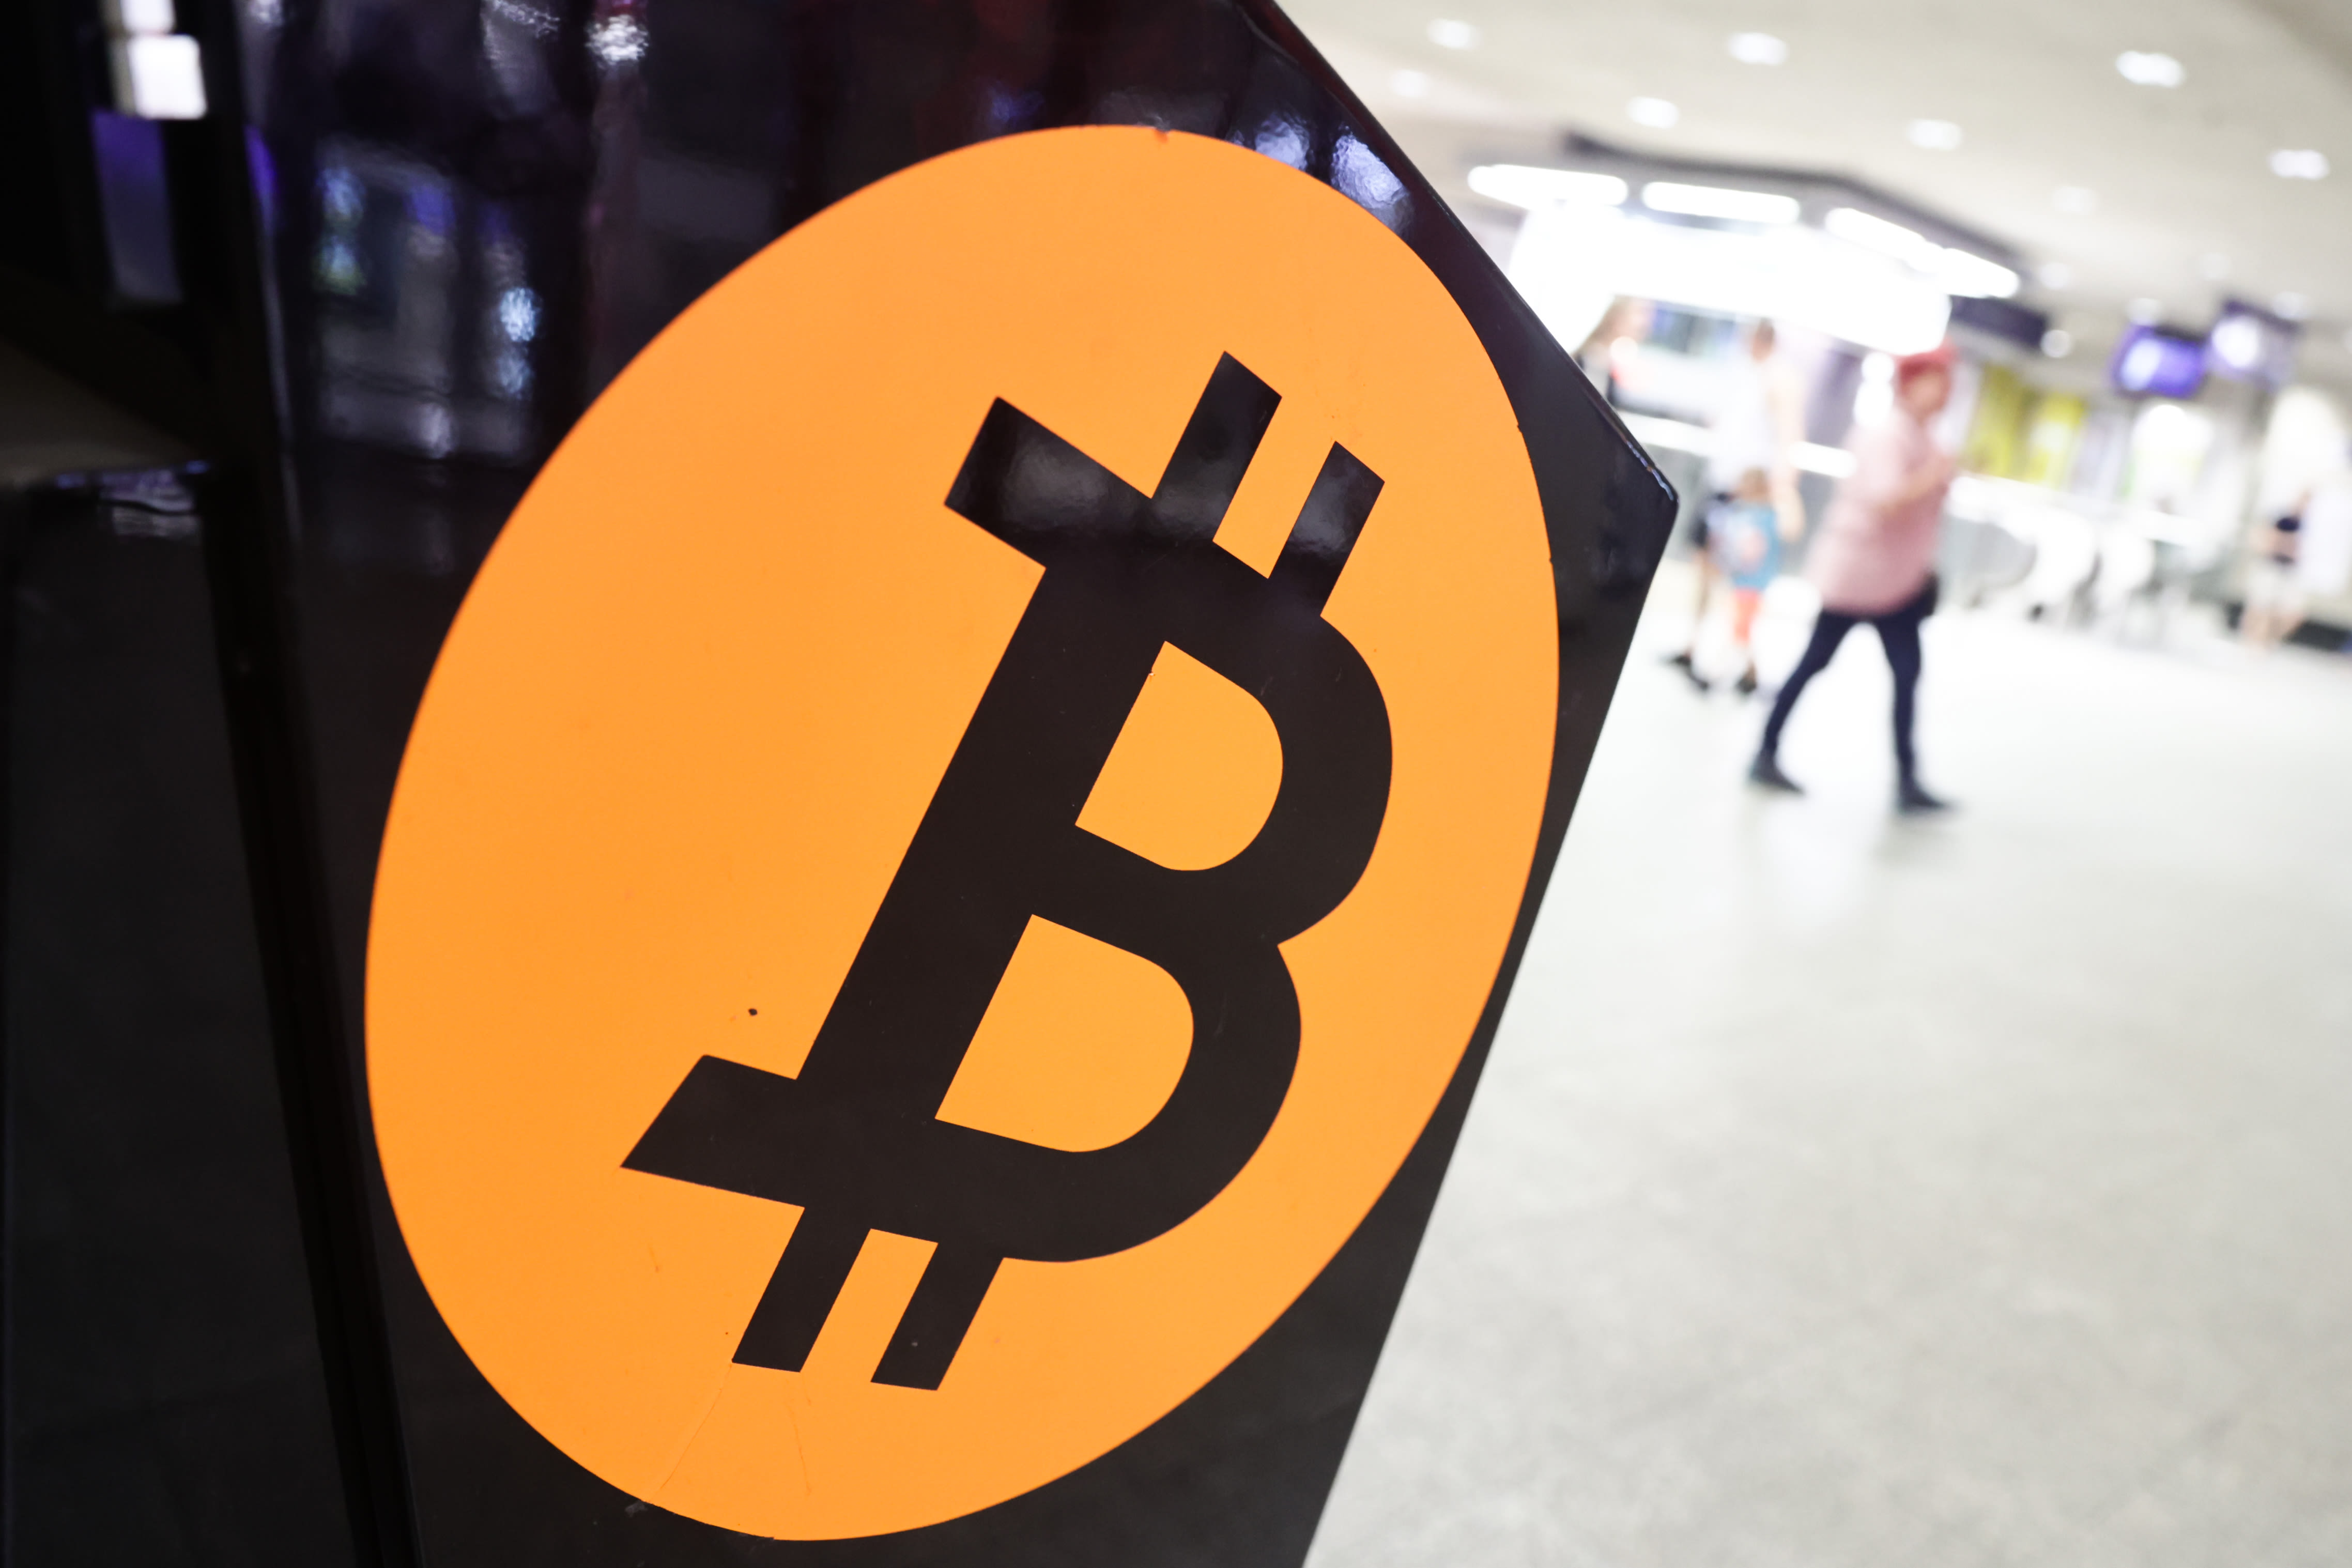 Bitcoin price falls amid broader stock market downturn